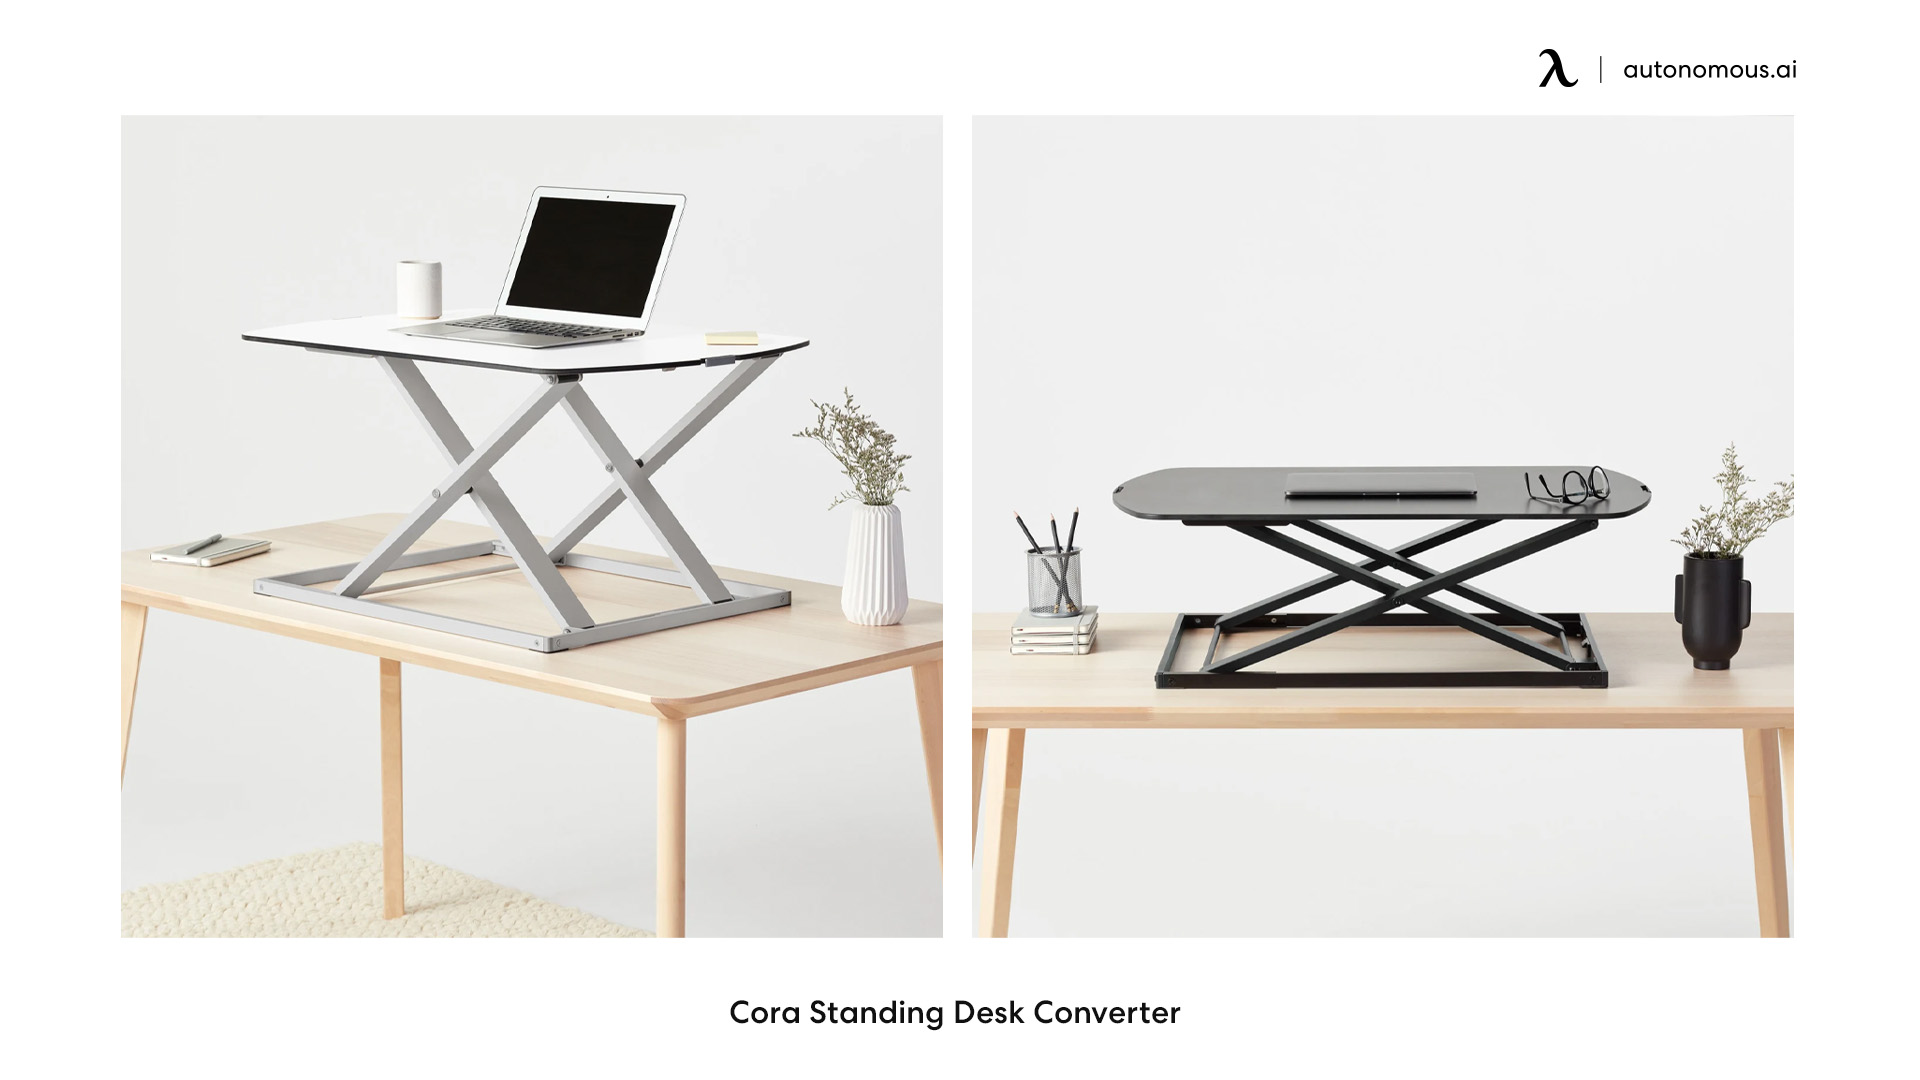 Cora adjustable standing desk converter